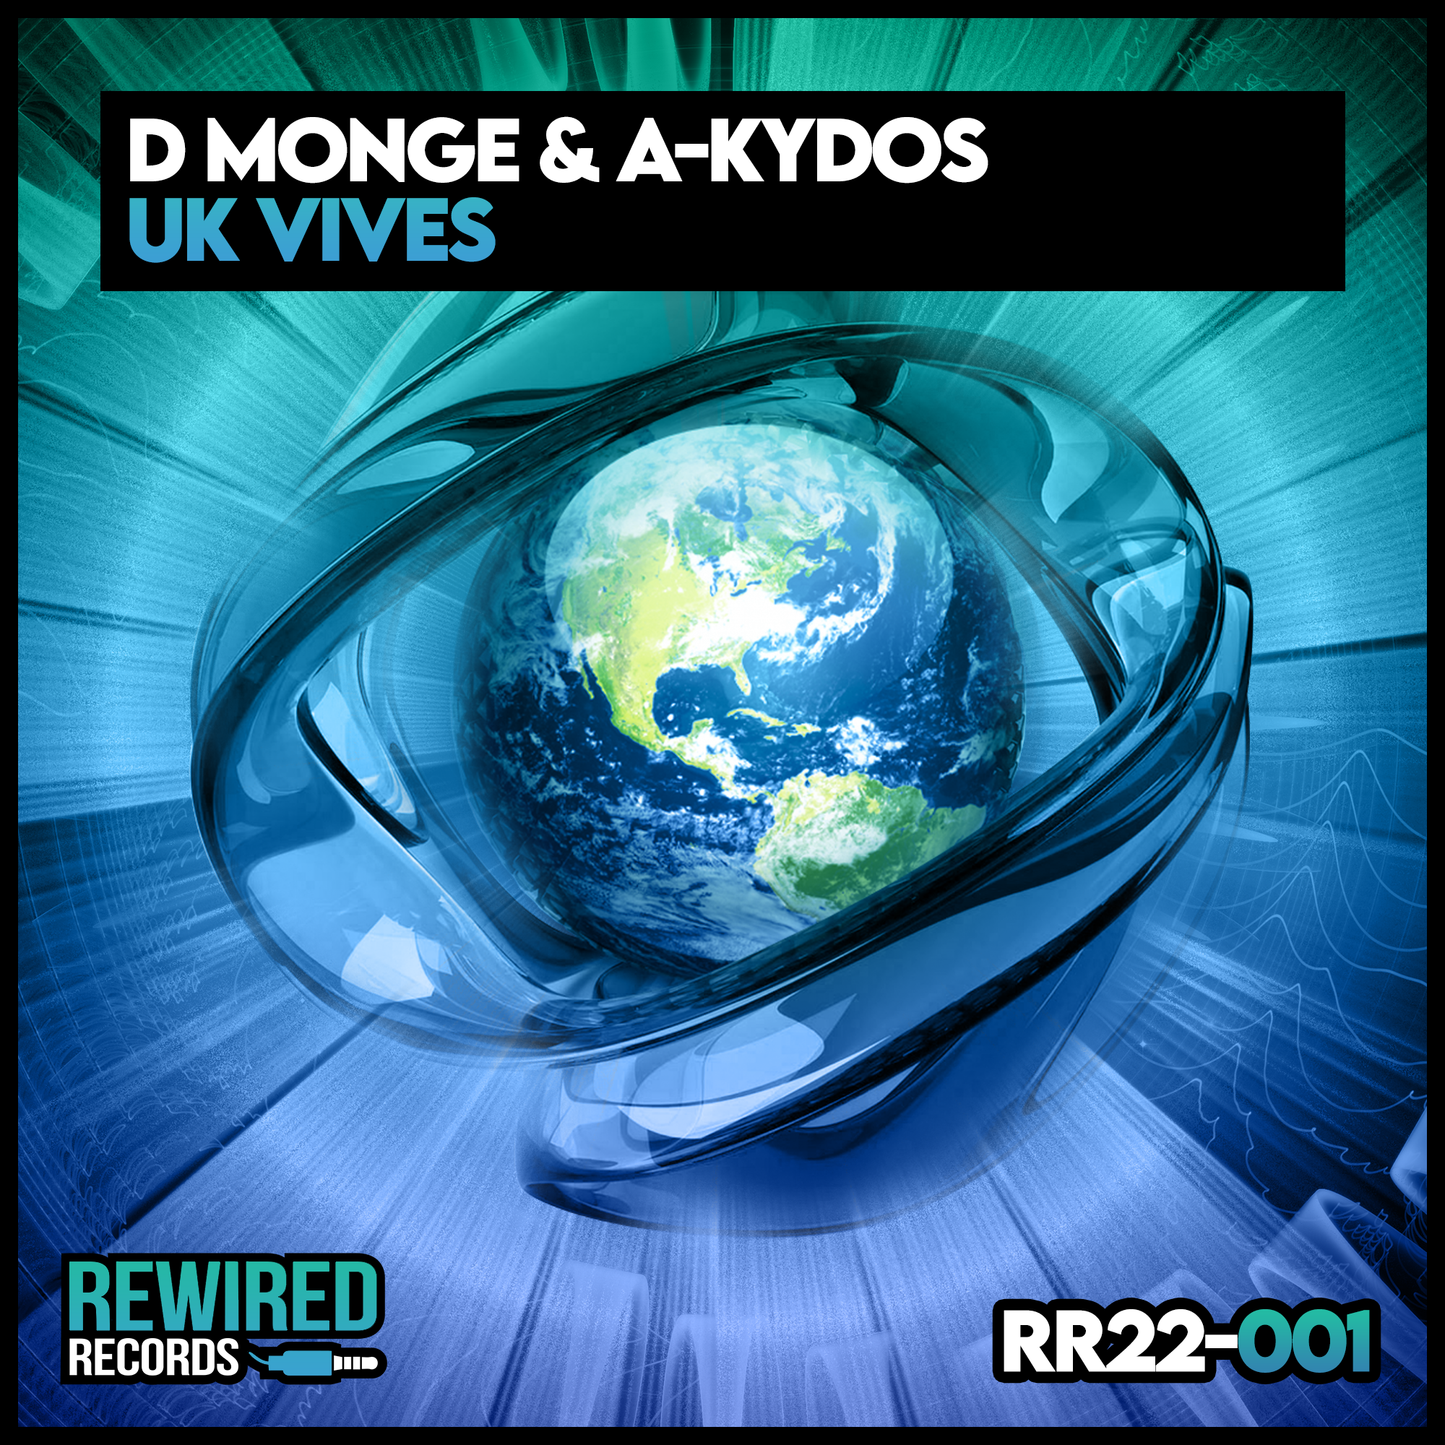 D Monge & A-kydos - UK Vives